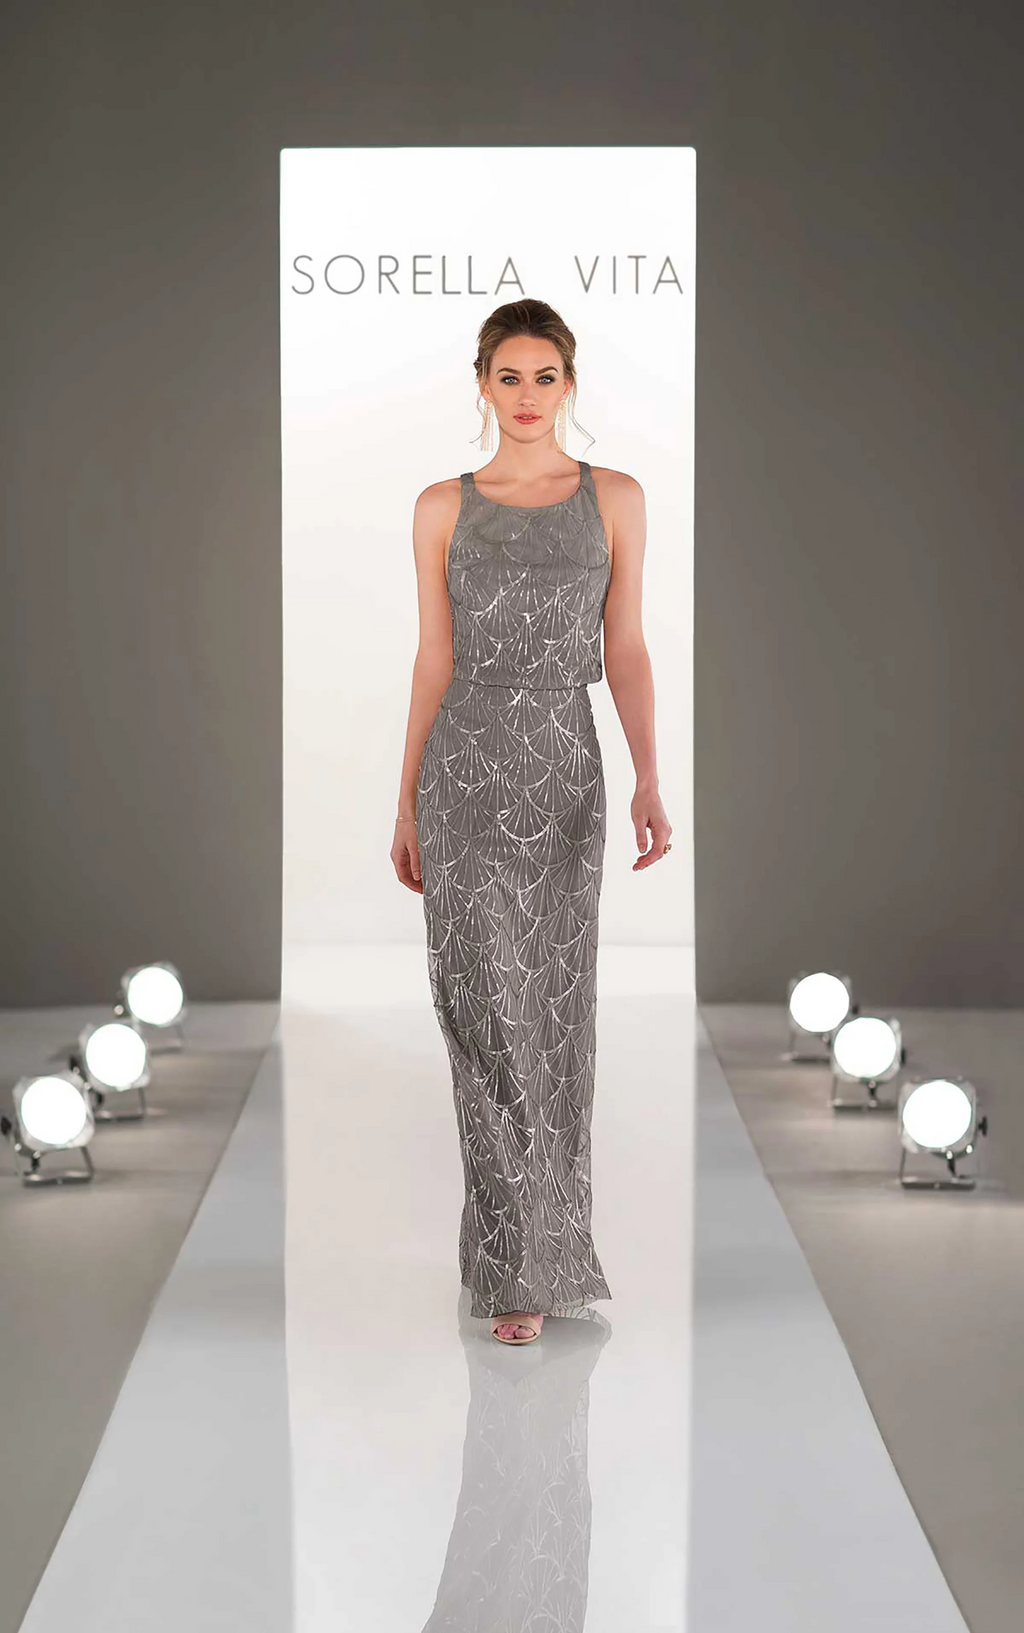 Sorella Vita Dress Style 9064 (Platinum-Size 16) Prom, Ball., Black-tie, Bridesmaid, Pageant